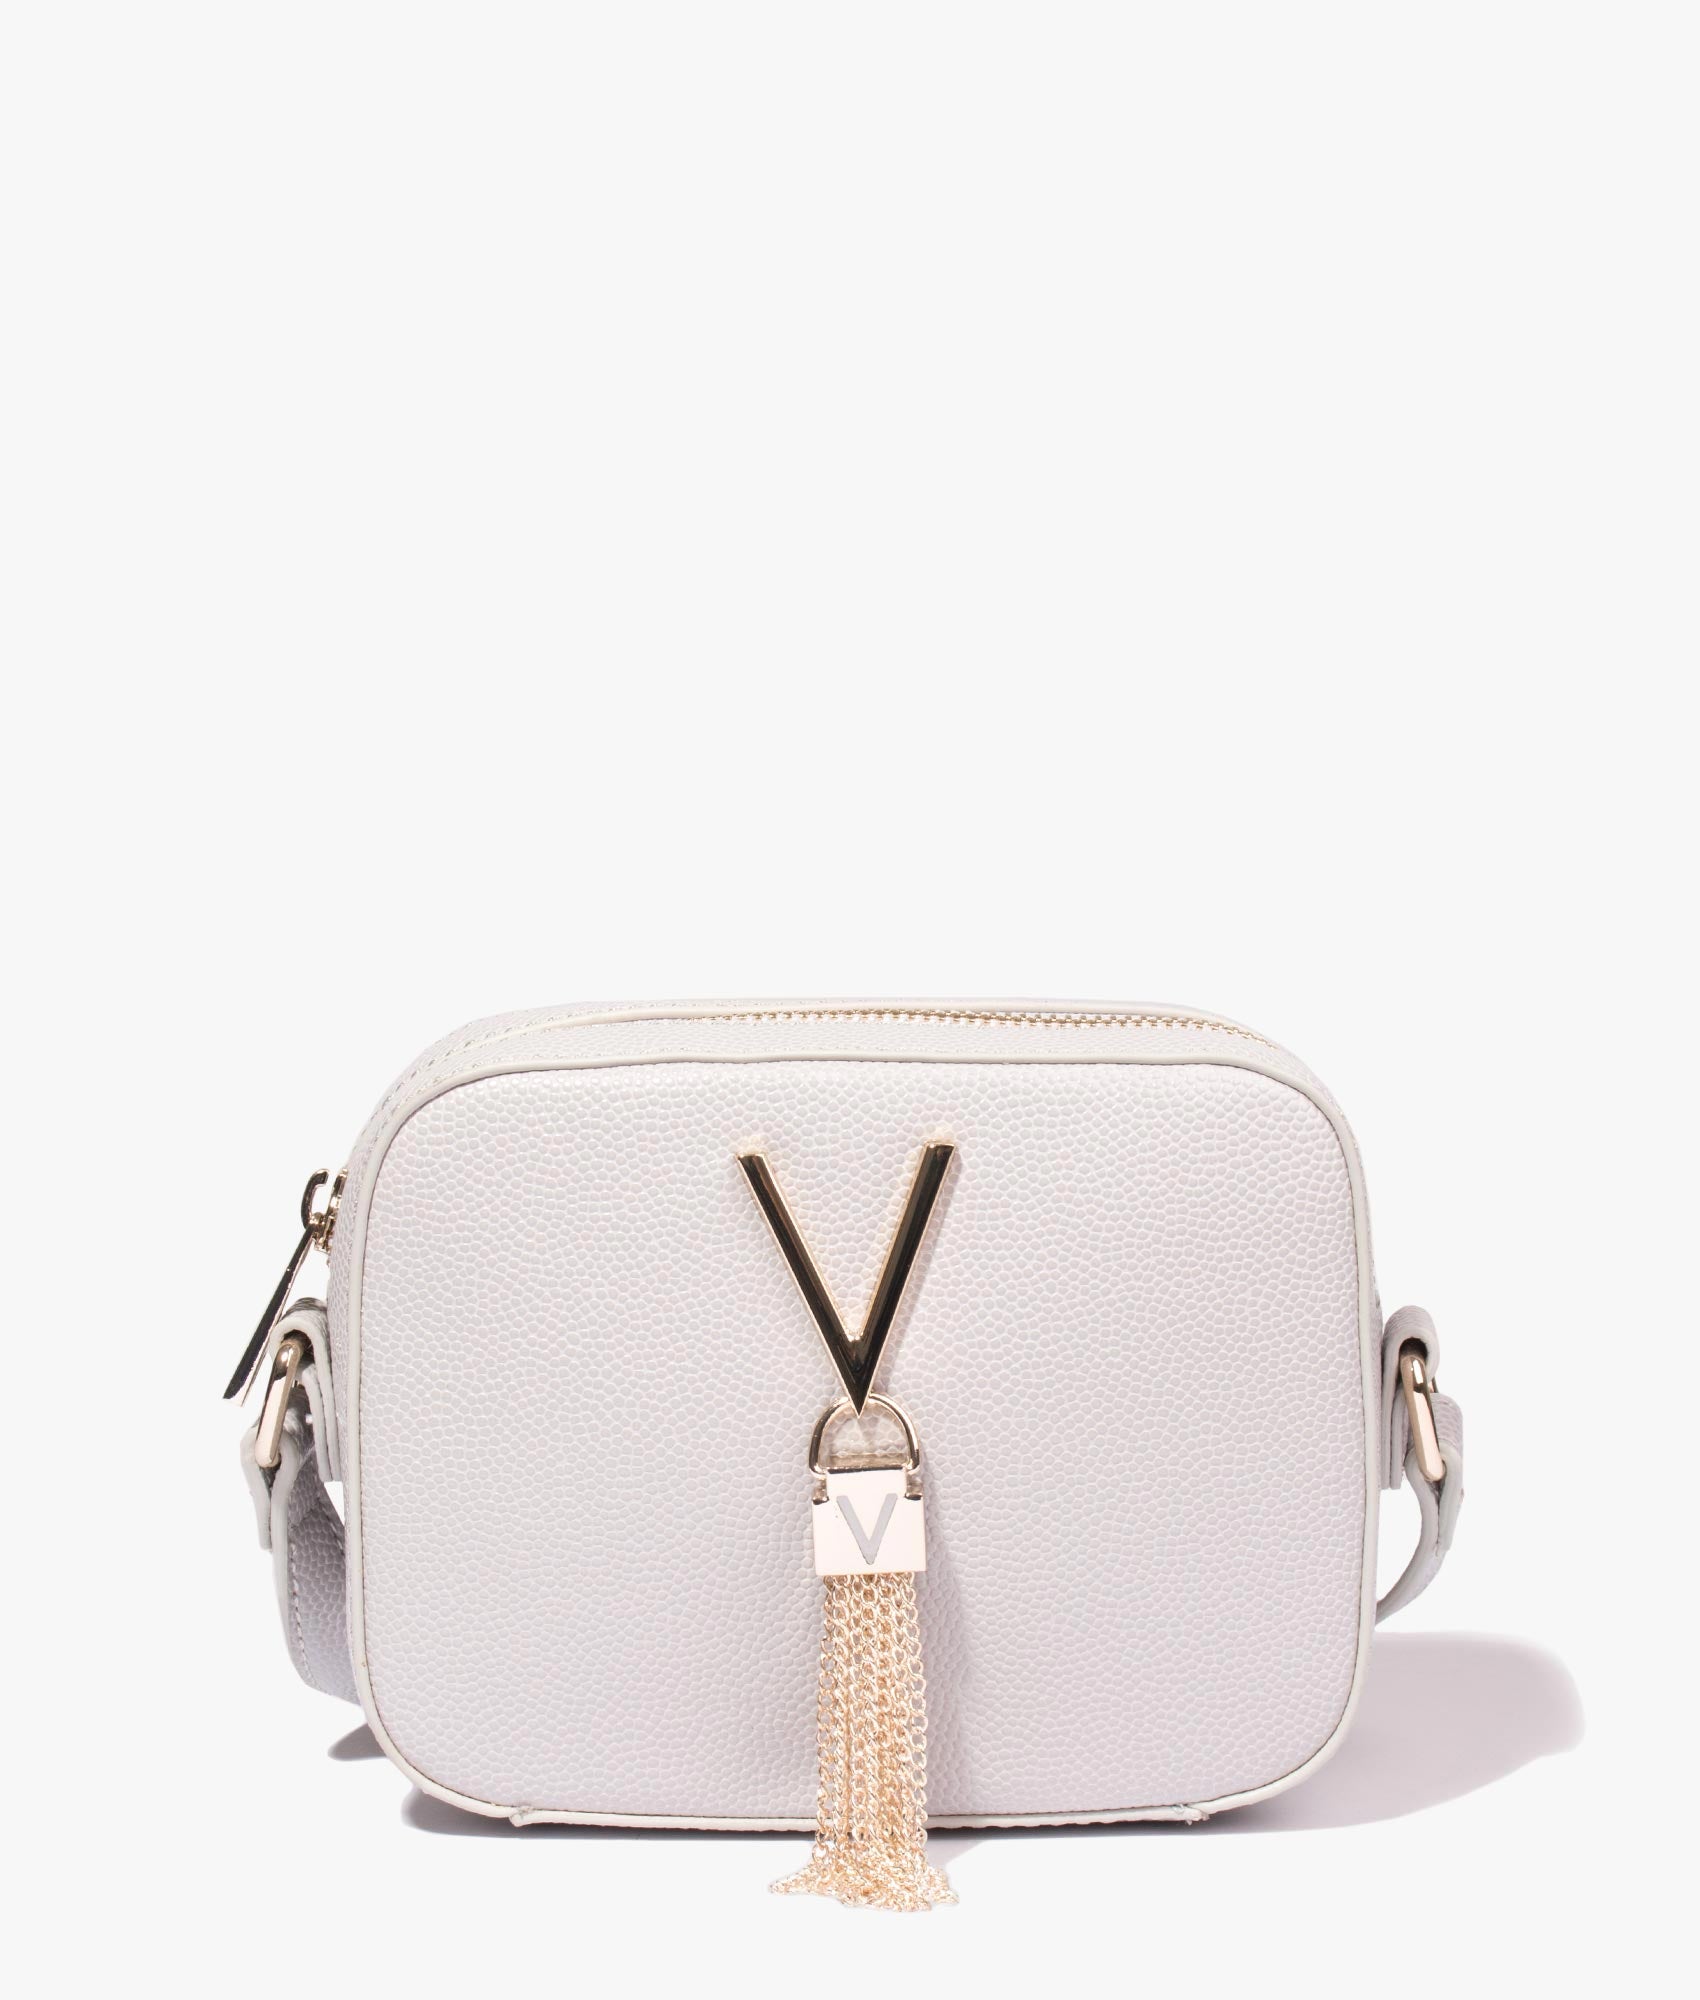 Valentino bags | Divina camera bag in ghiacchio | EQVVS Womens